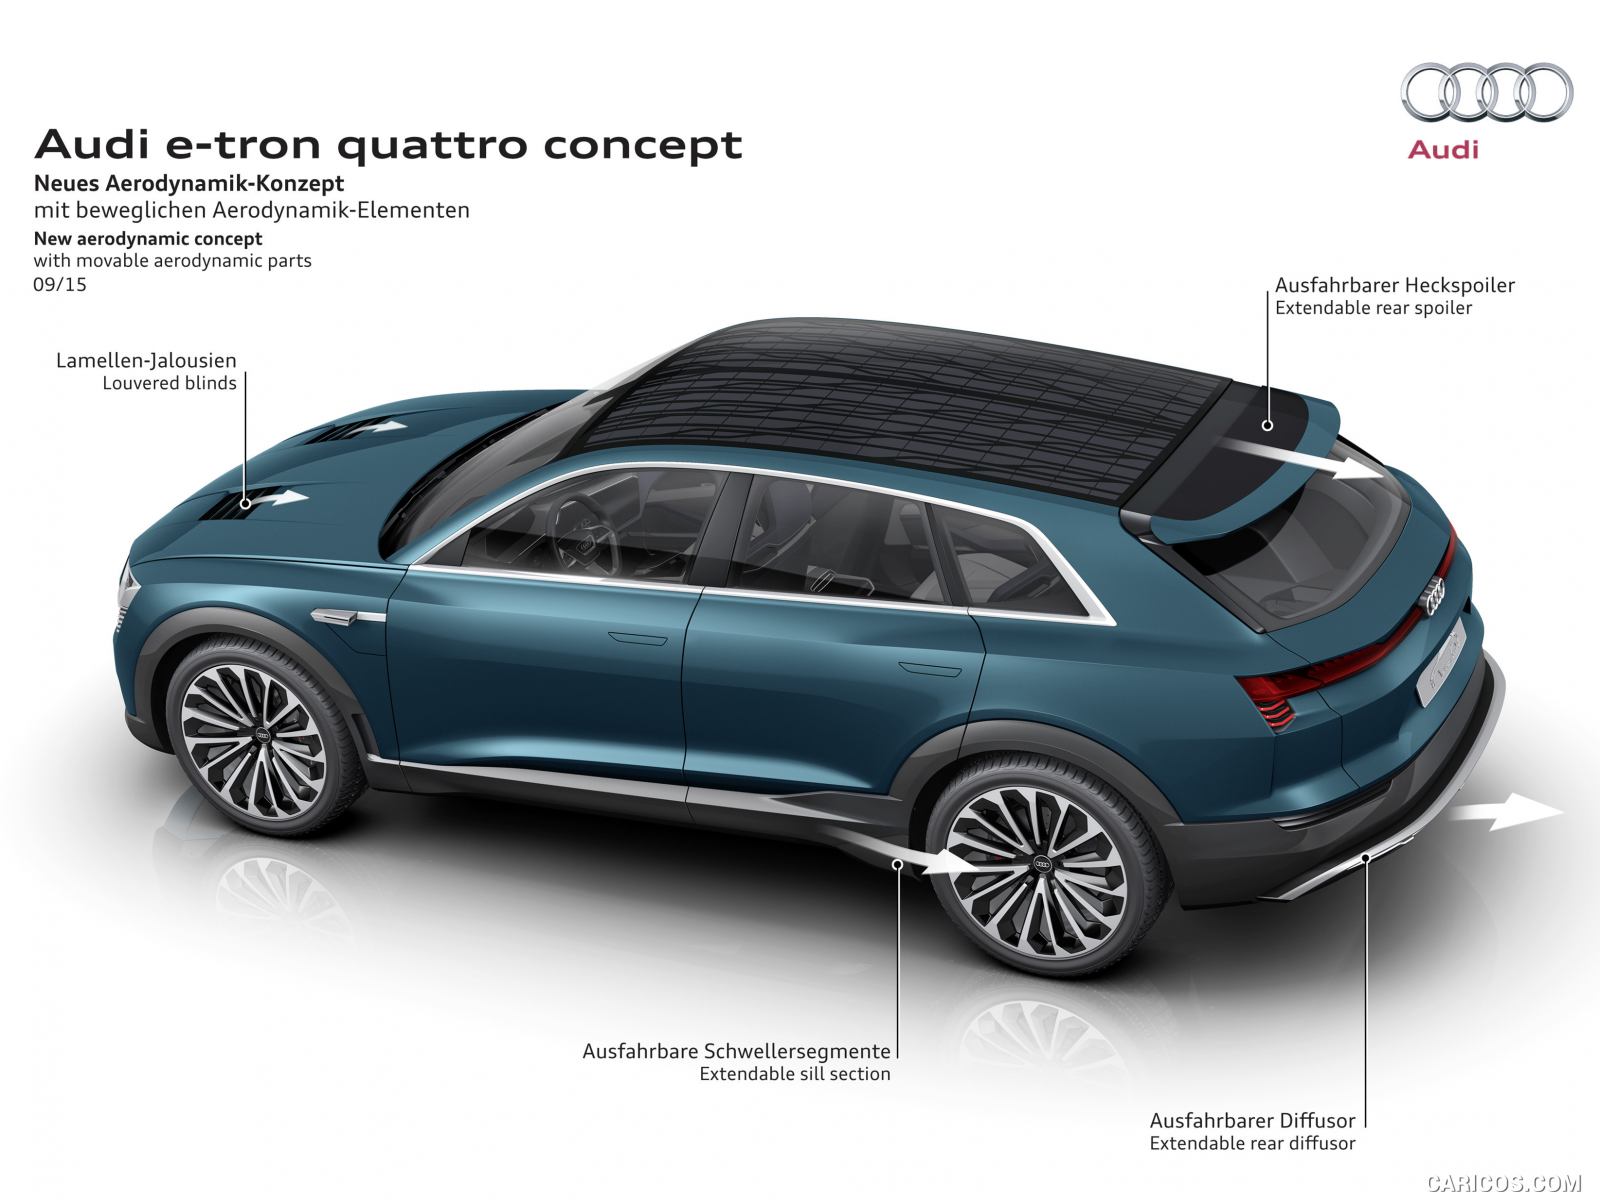 2015 Audi etron Quattro SUV Concept  New Aerodynamic Concept with 